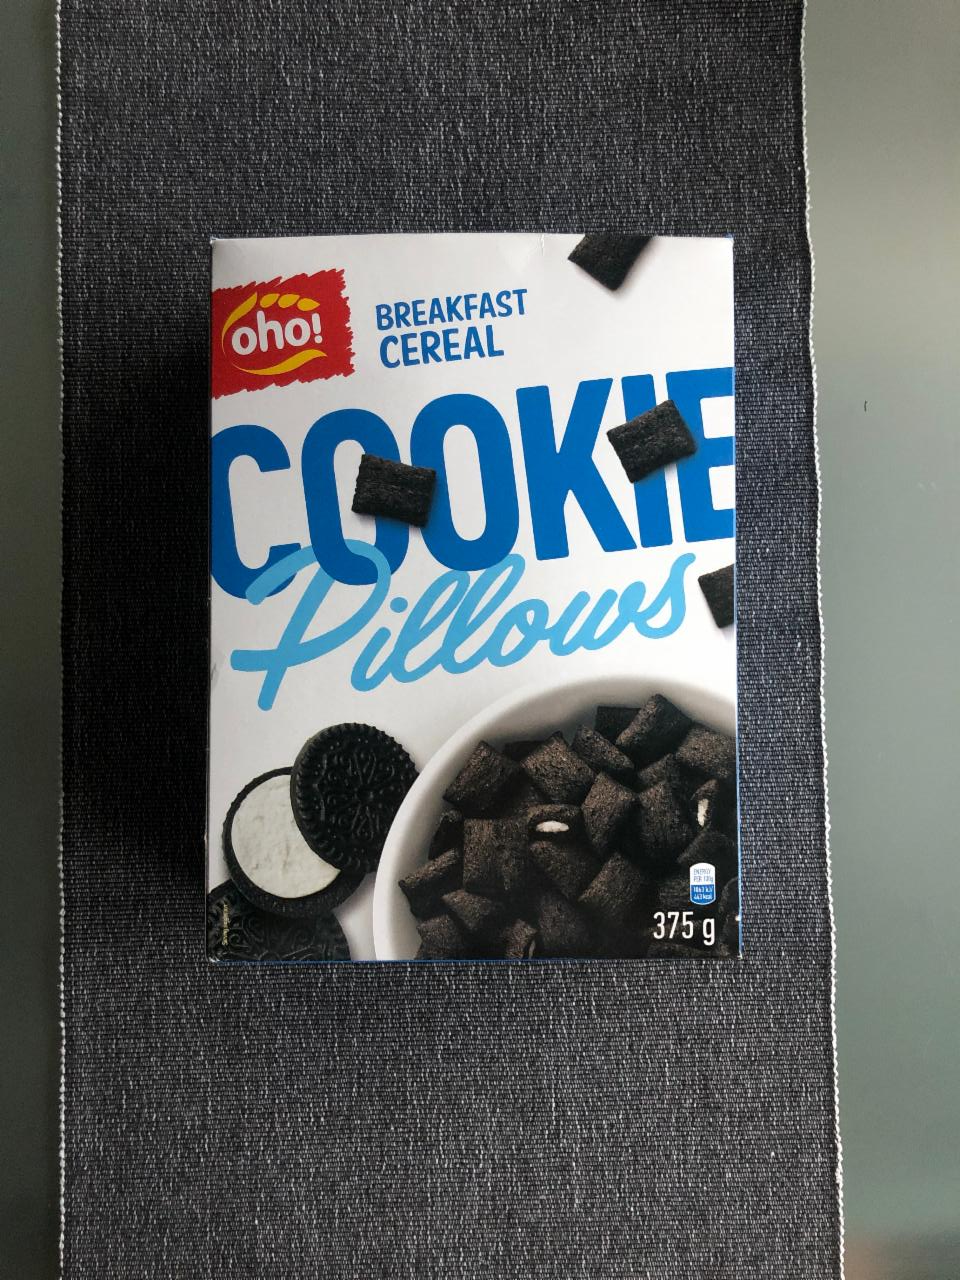 Zdjęcia - Breakfast Cereal Cookie Pillows oho